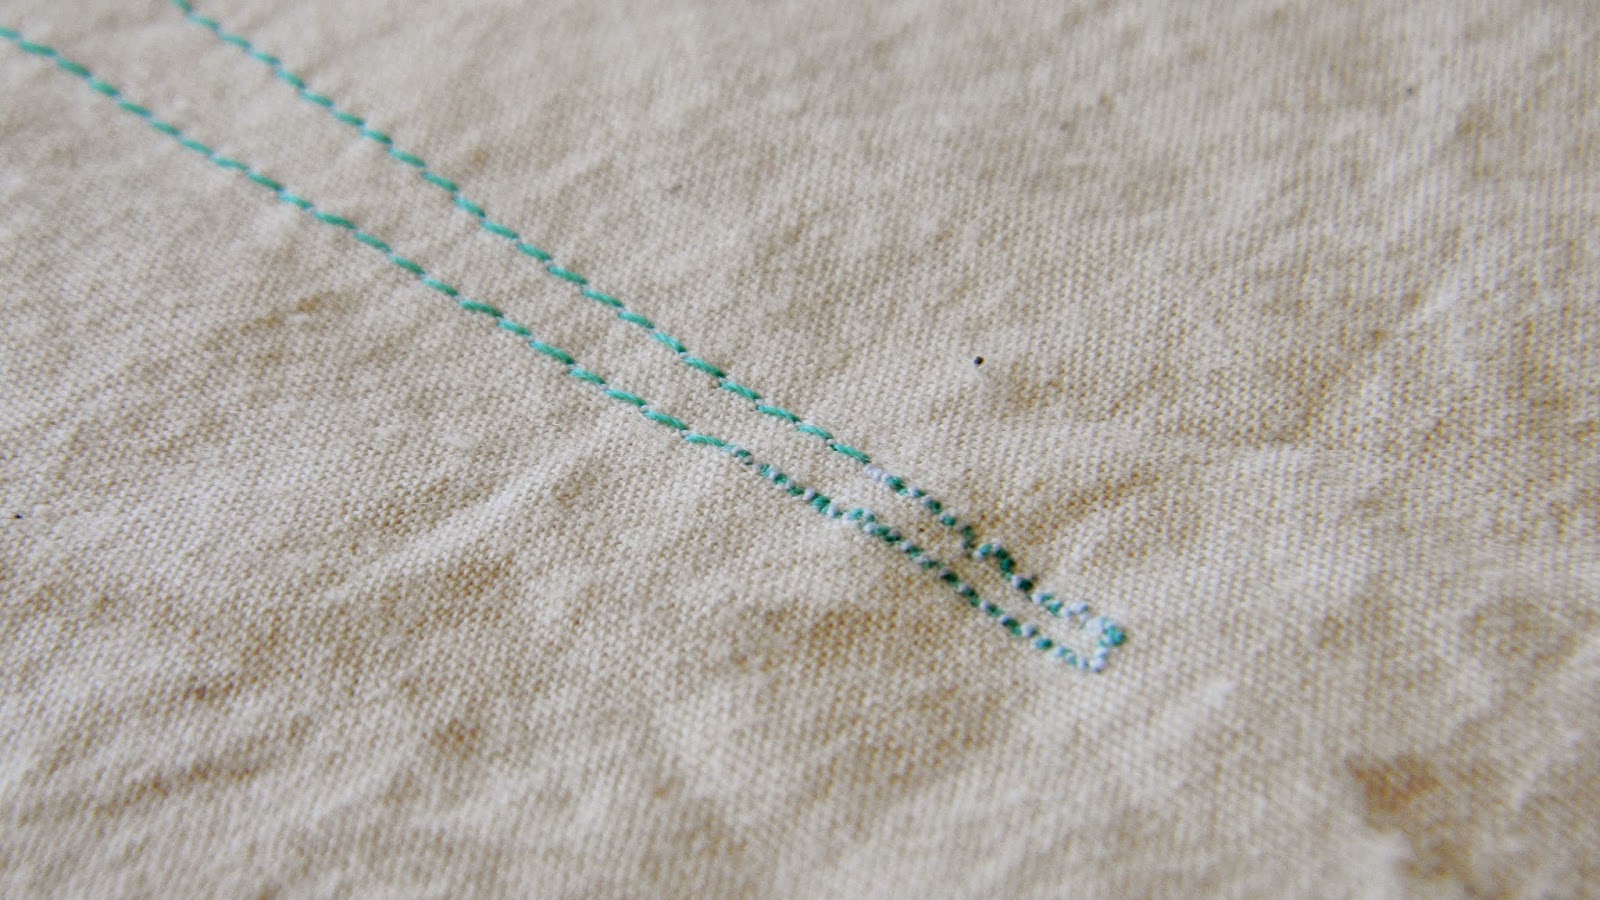 Reinforcement Stitching - basic sewing